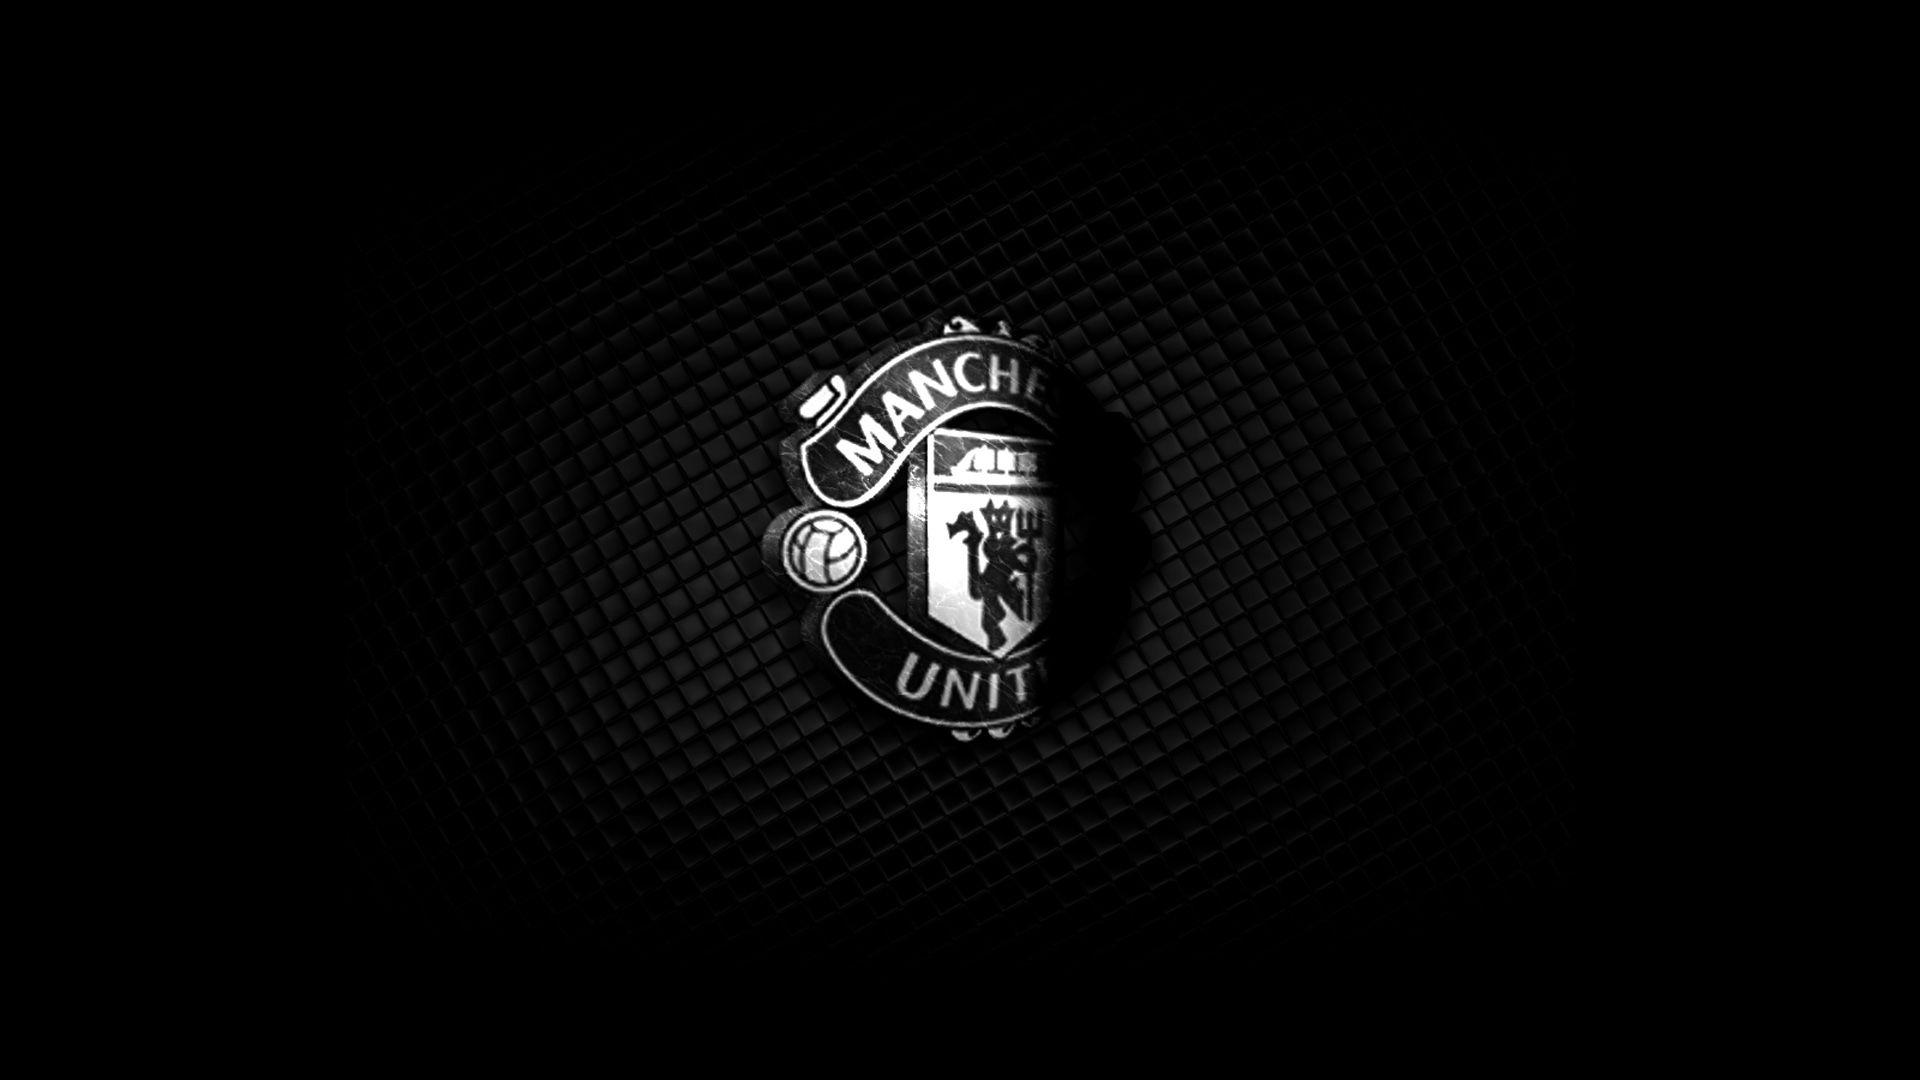 Cool Black Logo - Manchester United Black Logo Cool Soccer Wallpapers 1920x1080